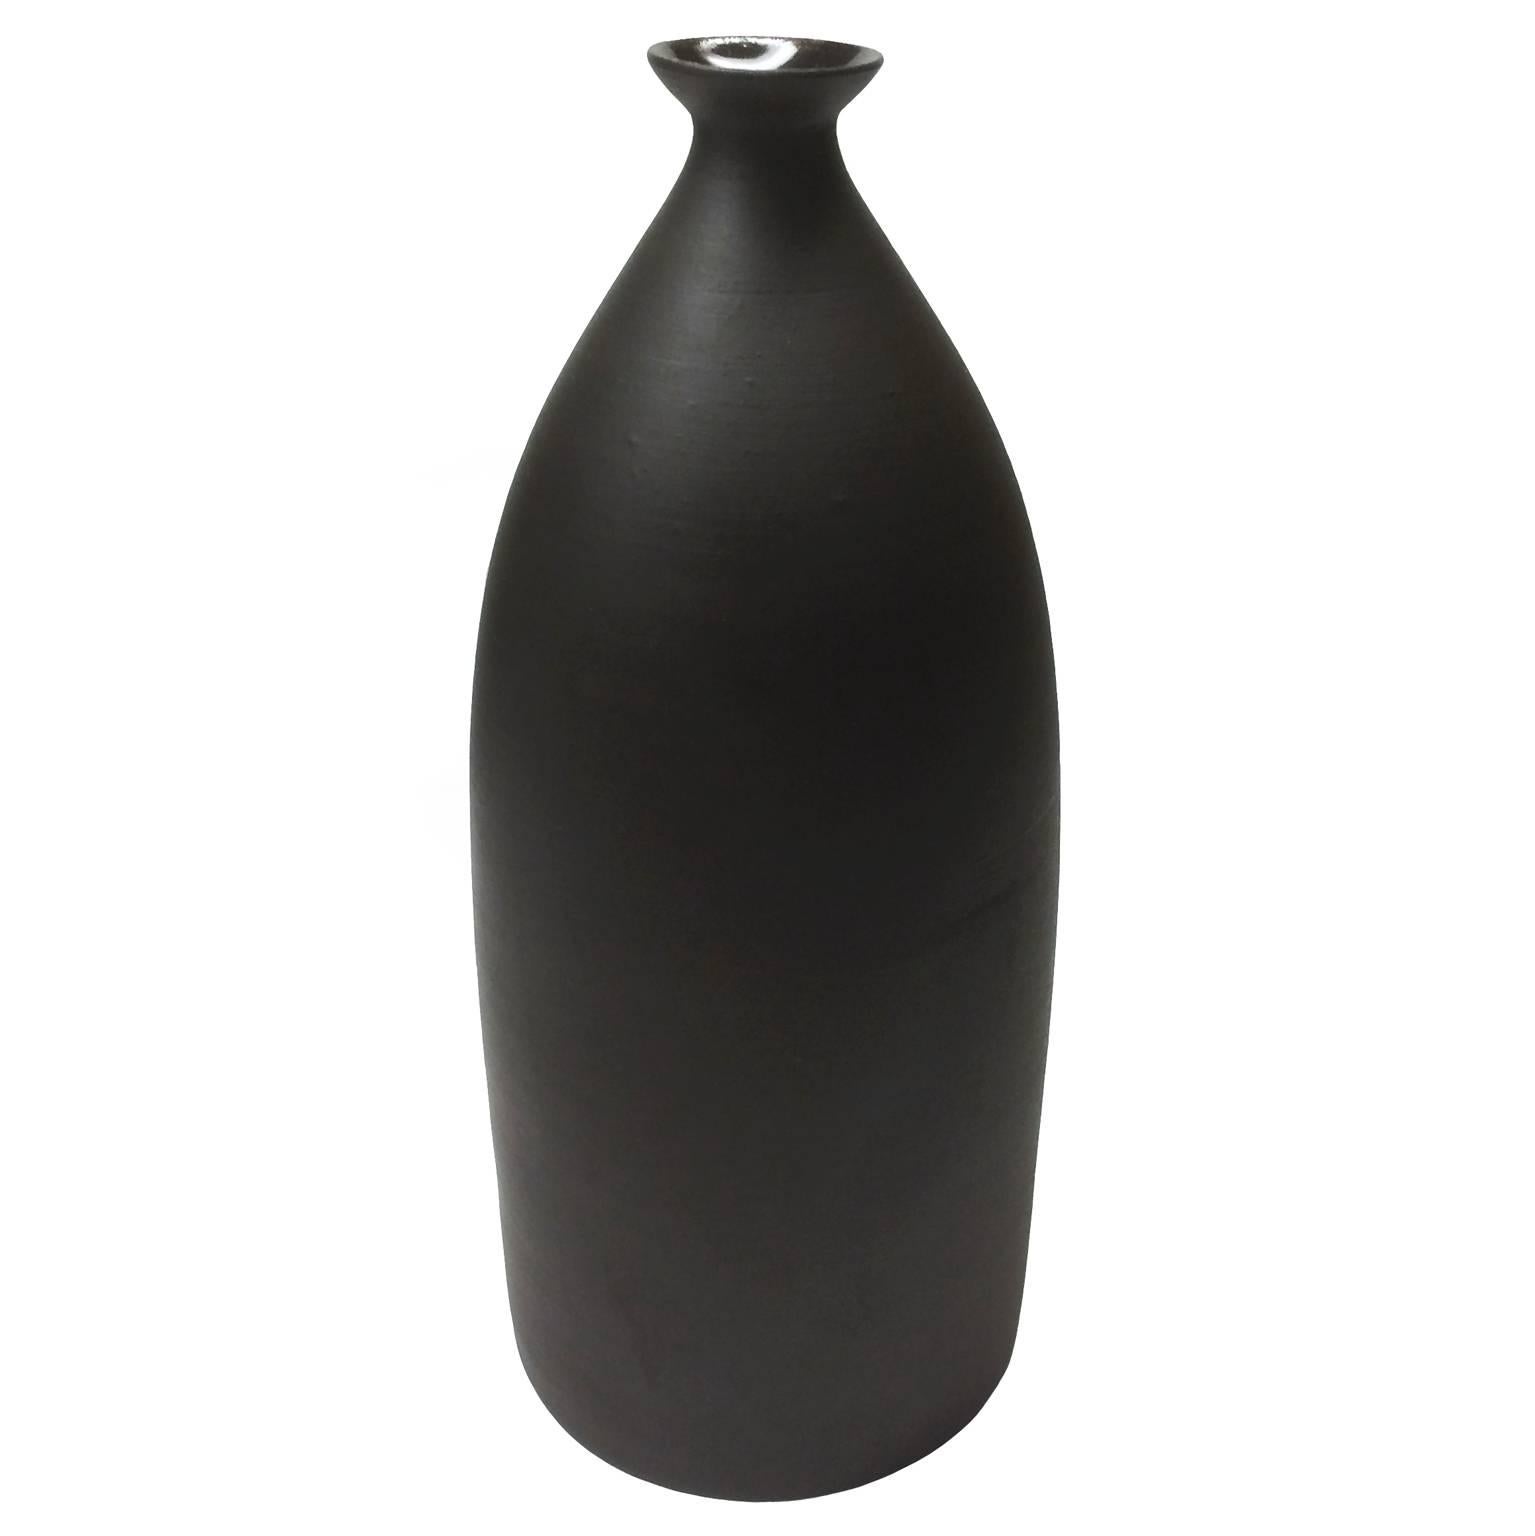 Medium Bottle Form Vase by Sandi Fellman